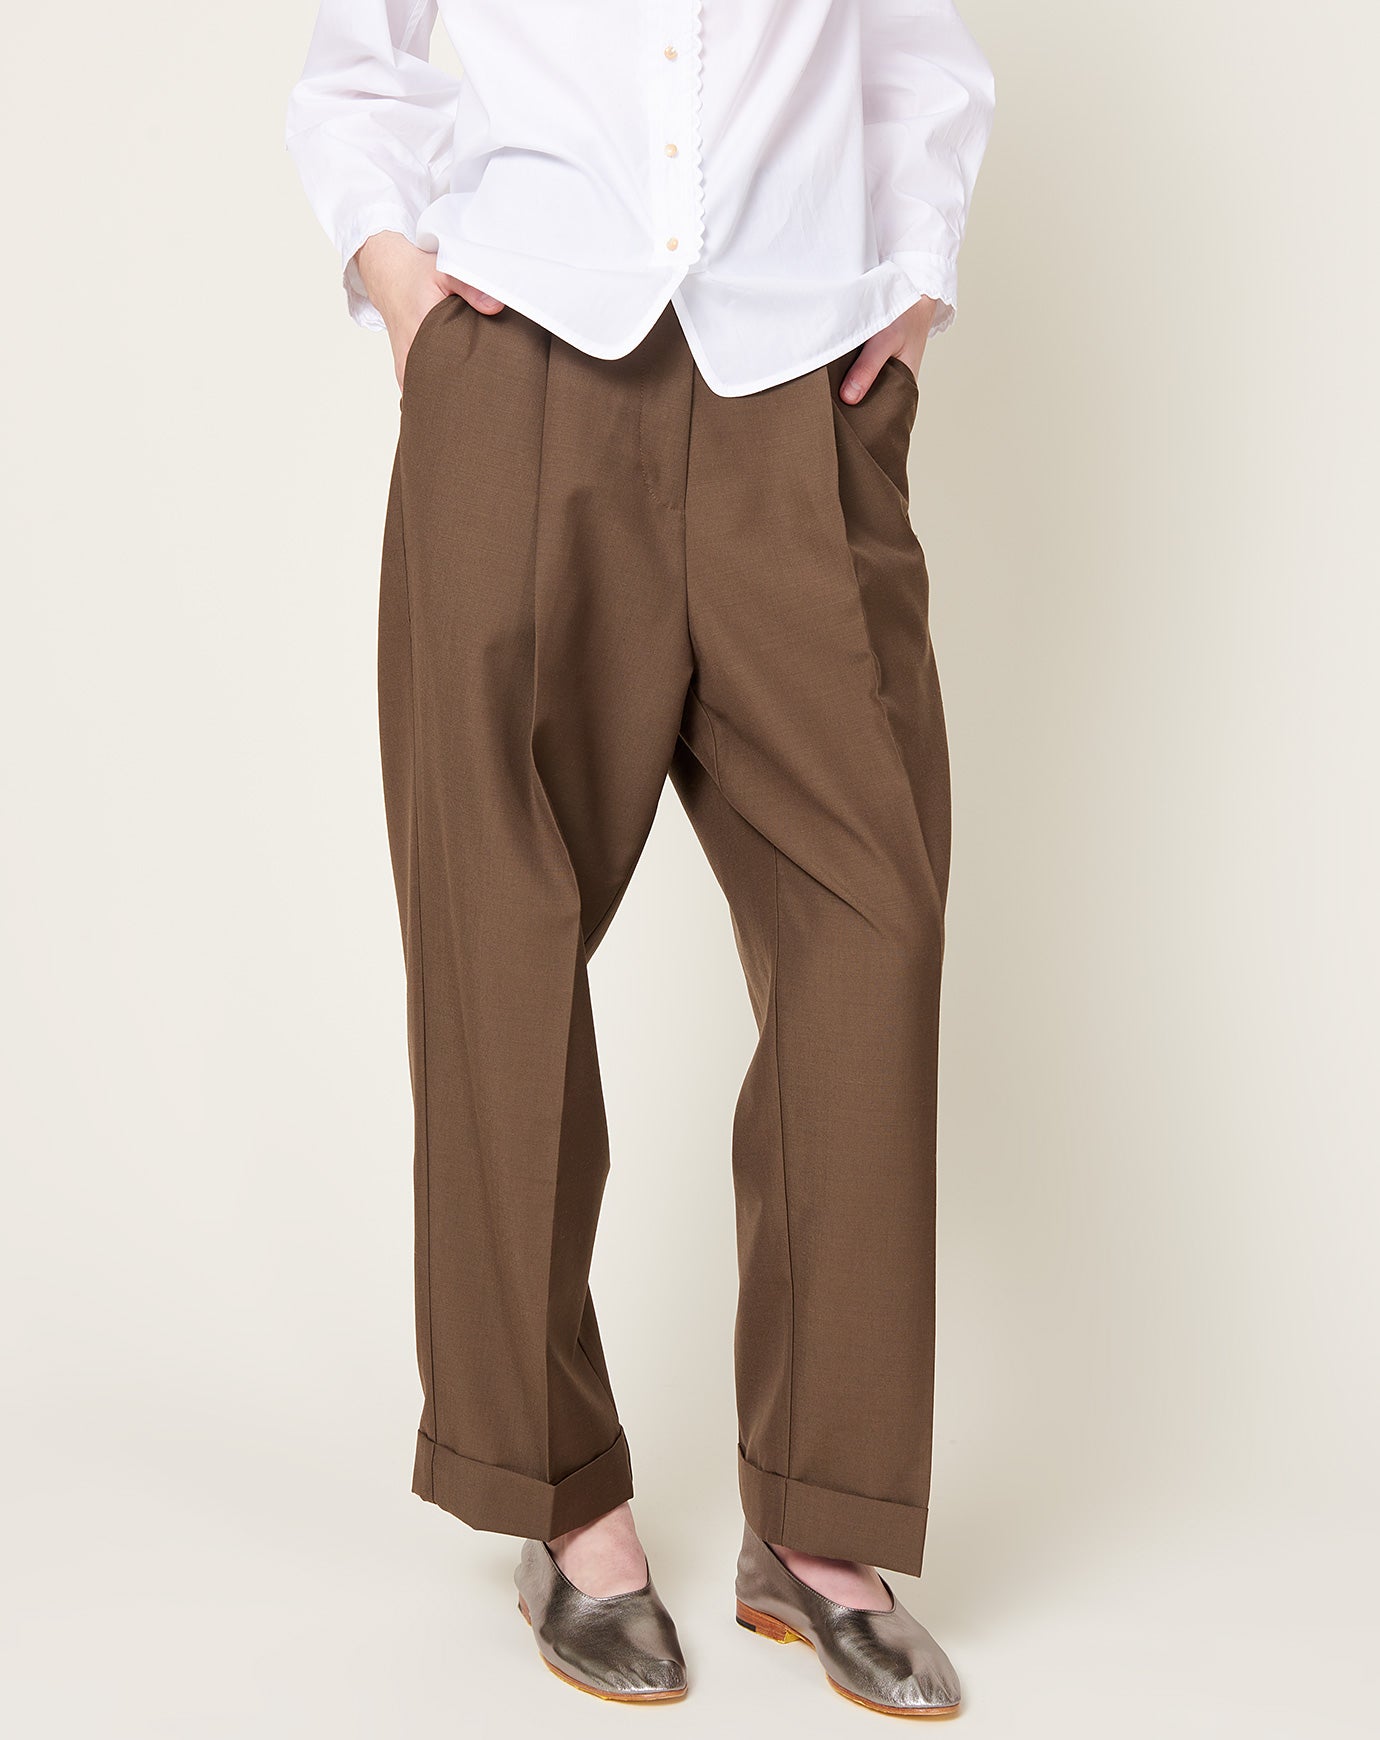 Mohair Tailoring Masculine Pants in Teak, Cordera, Covet + Lou